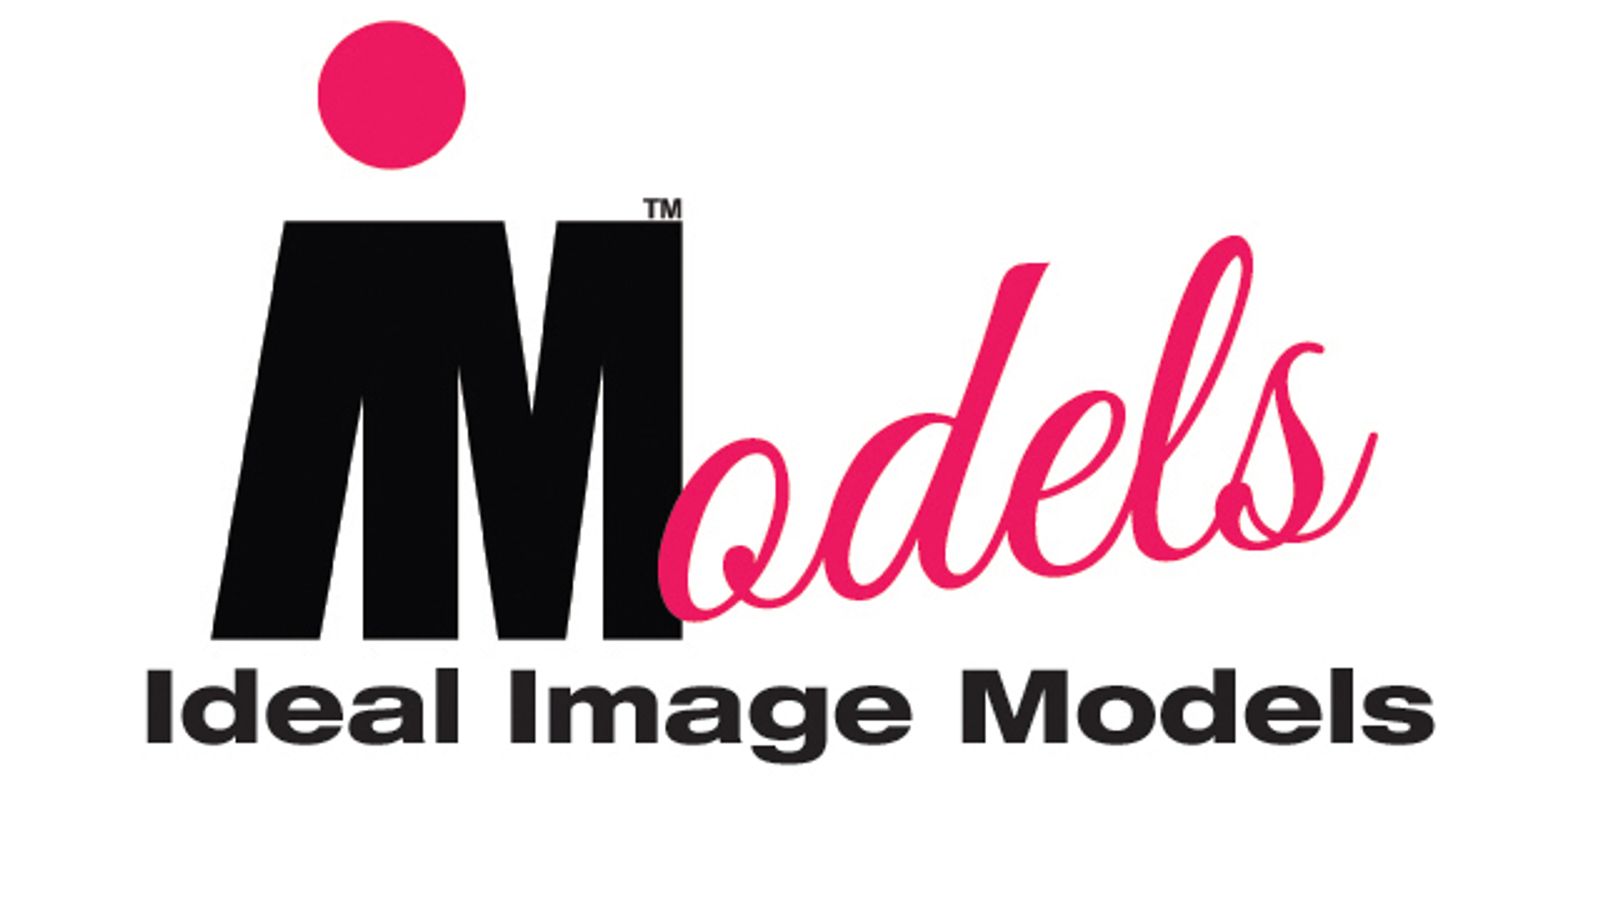 Ideal Image Management Becomes Ideal Image Models